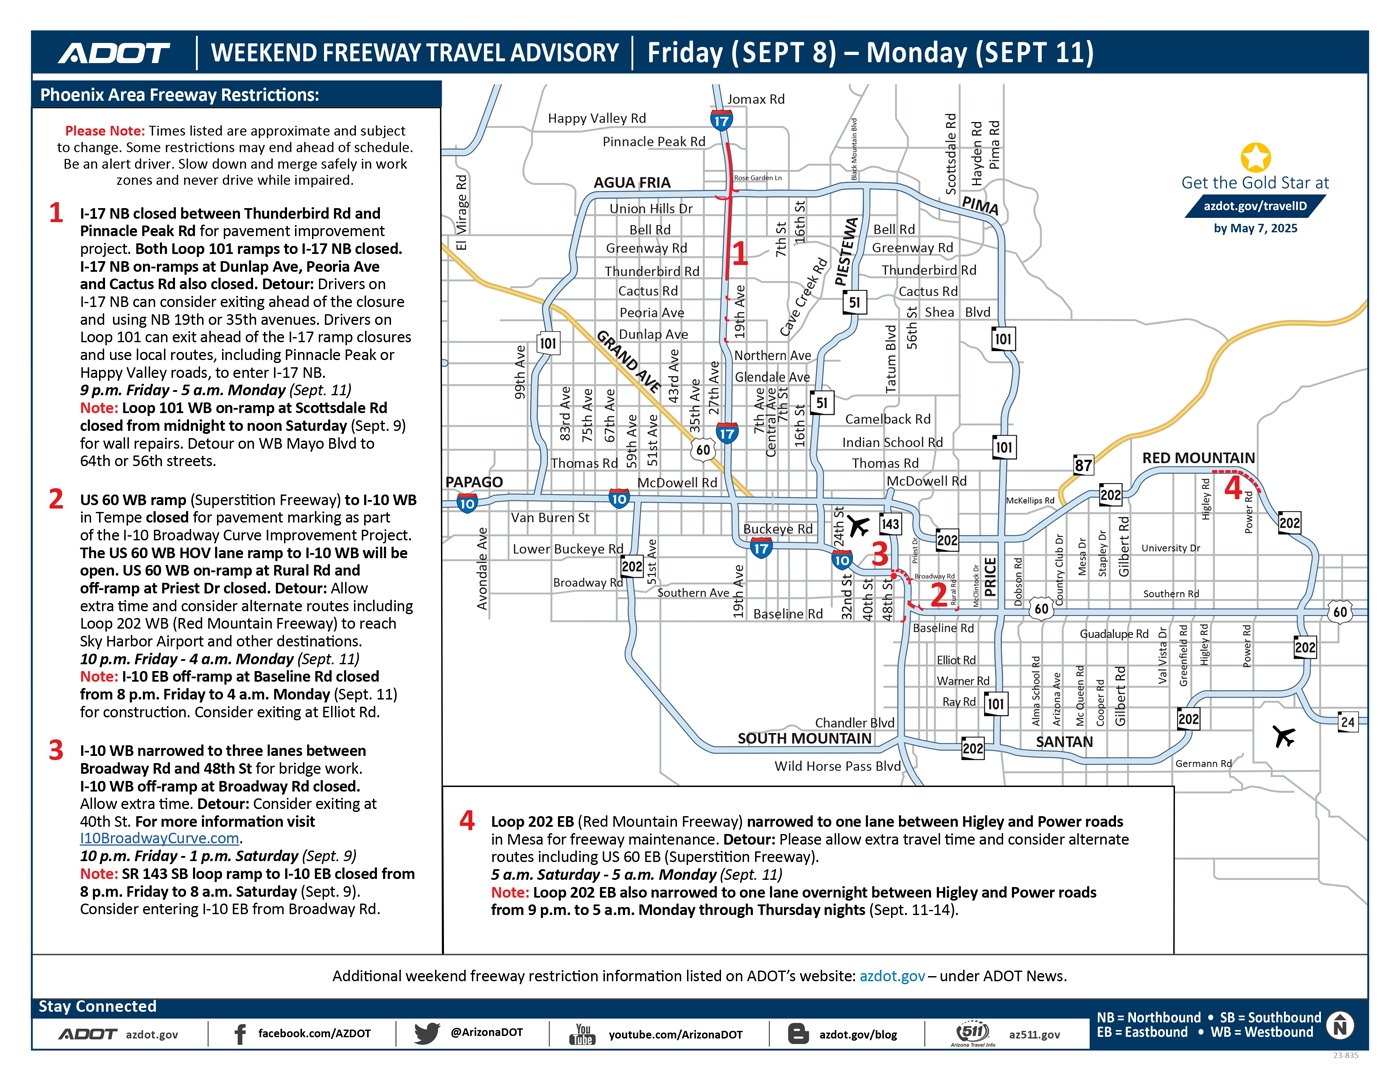 ADOT's Weekend Freeway Travel Advisory Map (Sept. 8-11, '23) - Phoenix Area